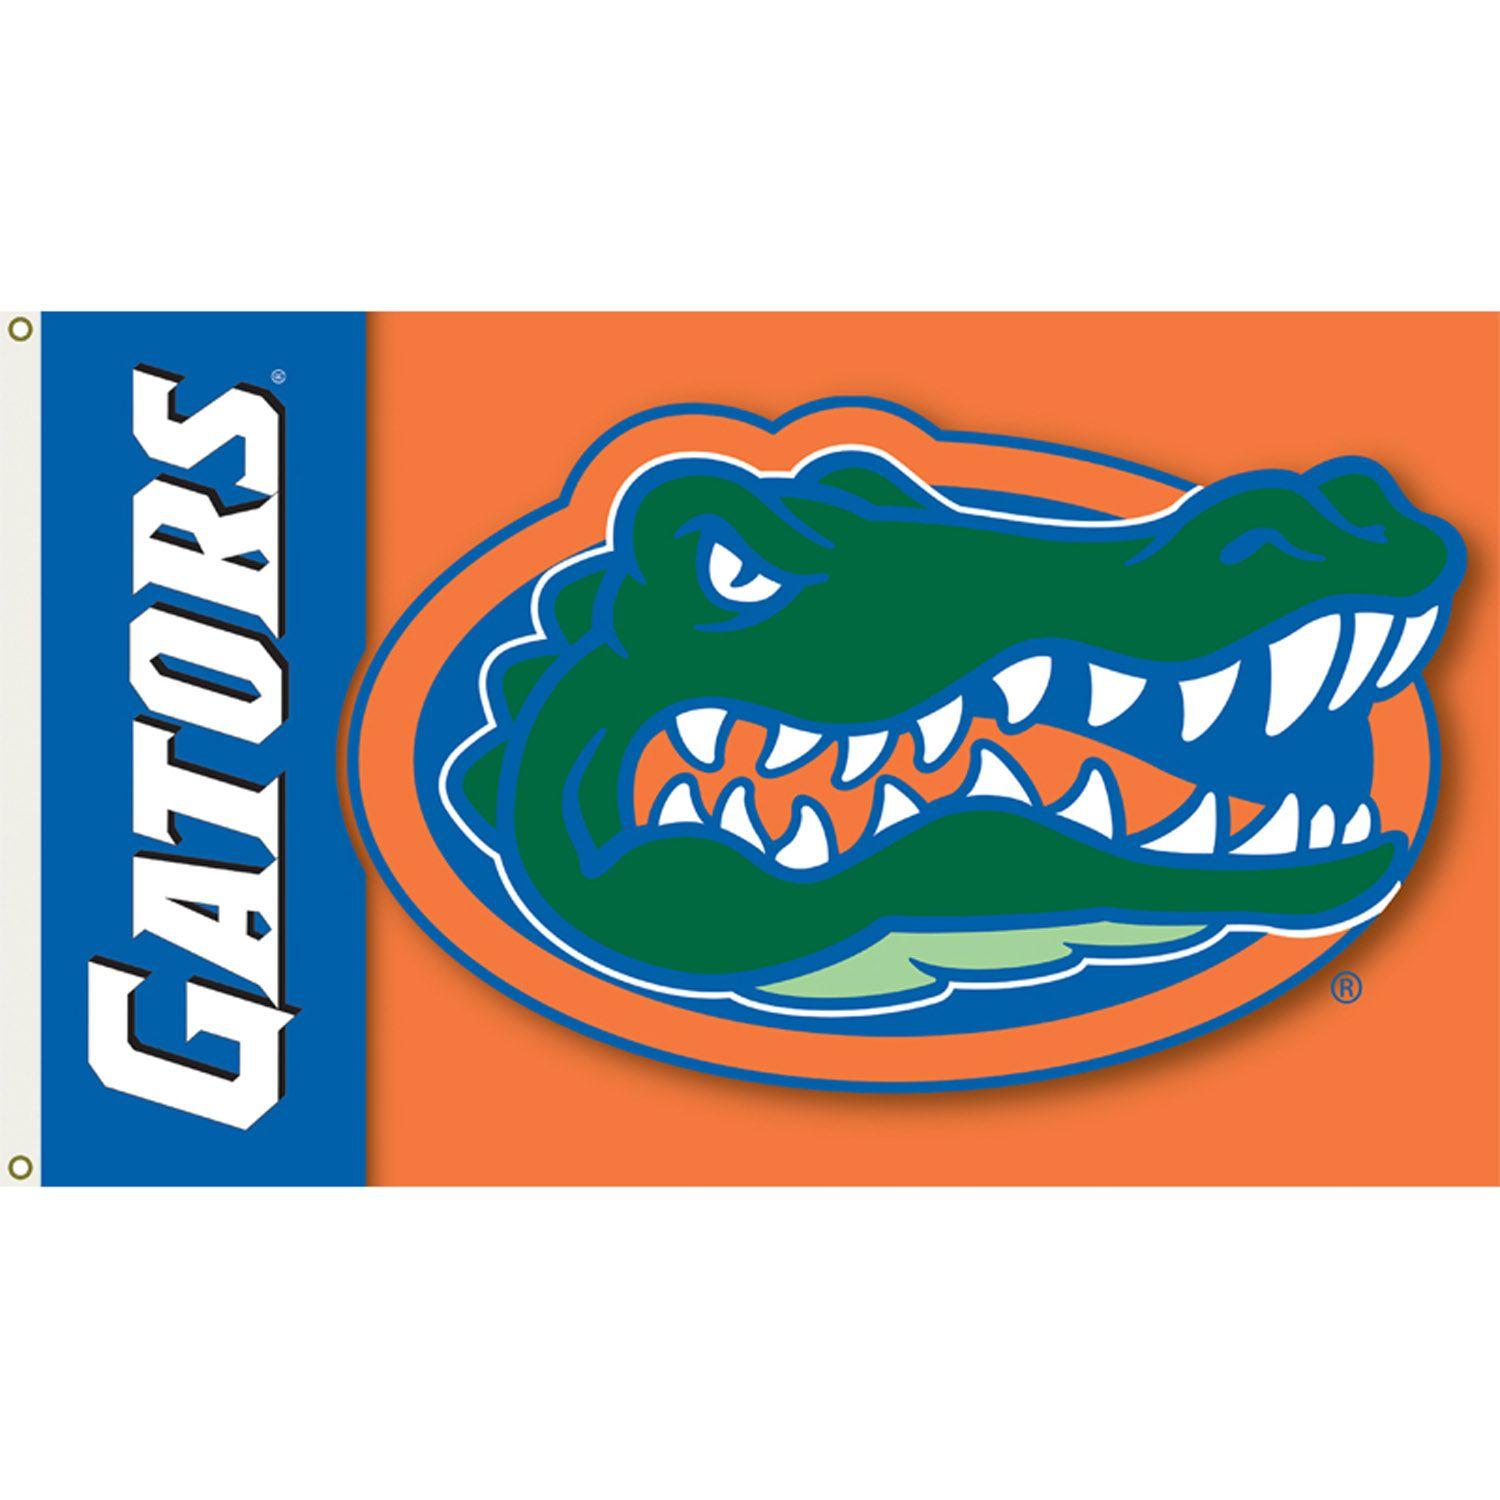 FL Gators Logo - Florida Gators 3ft x 5ft Team Flag Design 2